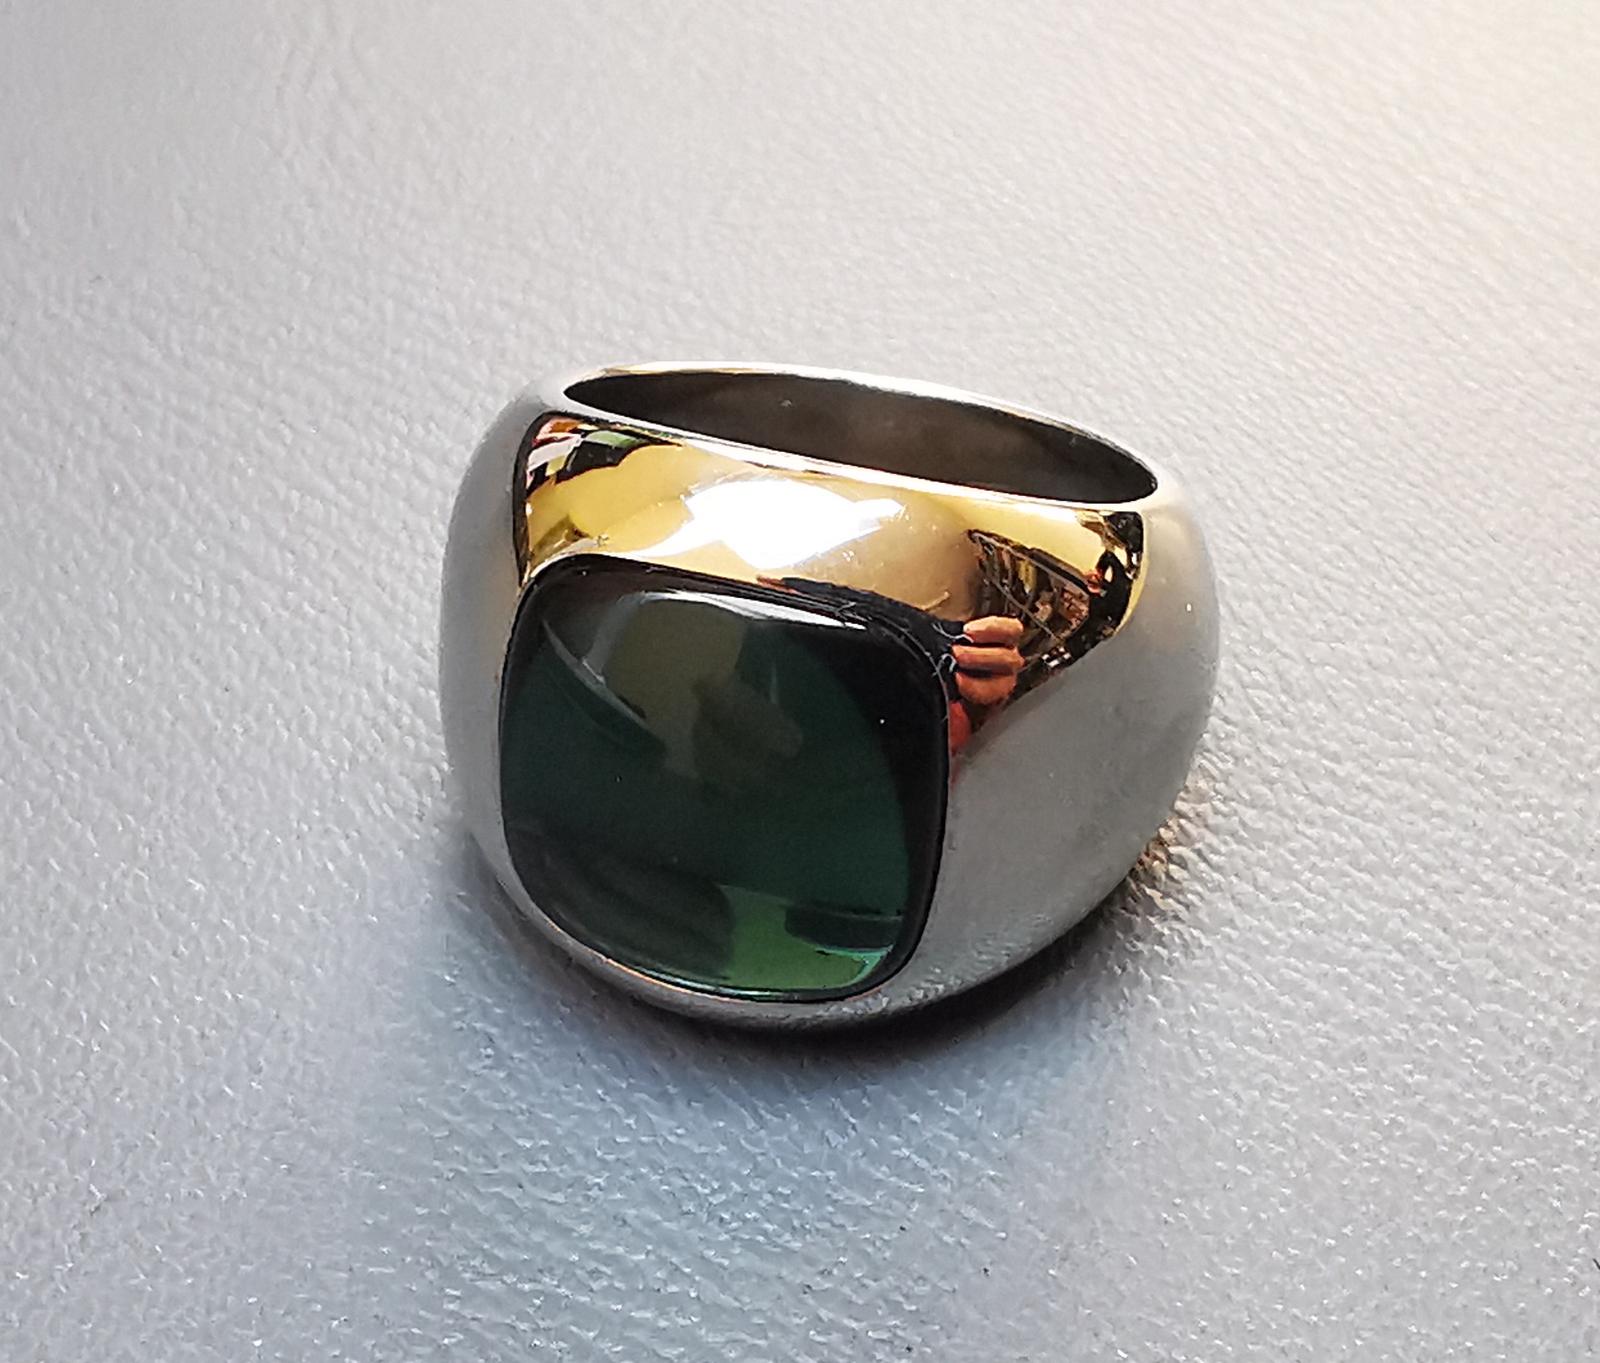 Xen prsteň z nerezovej ocele s quartzom, 52 mm. PC: 2500 Kč - undefined